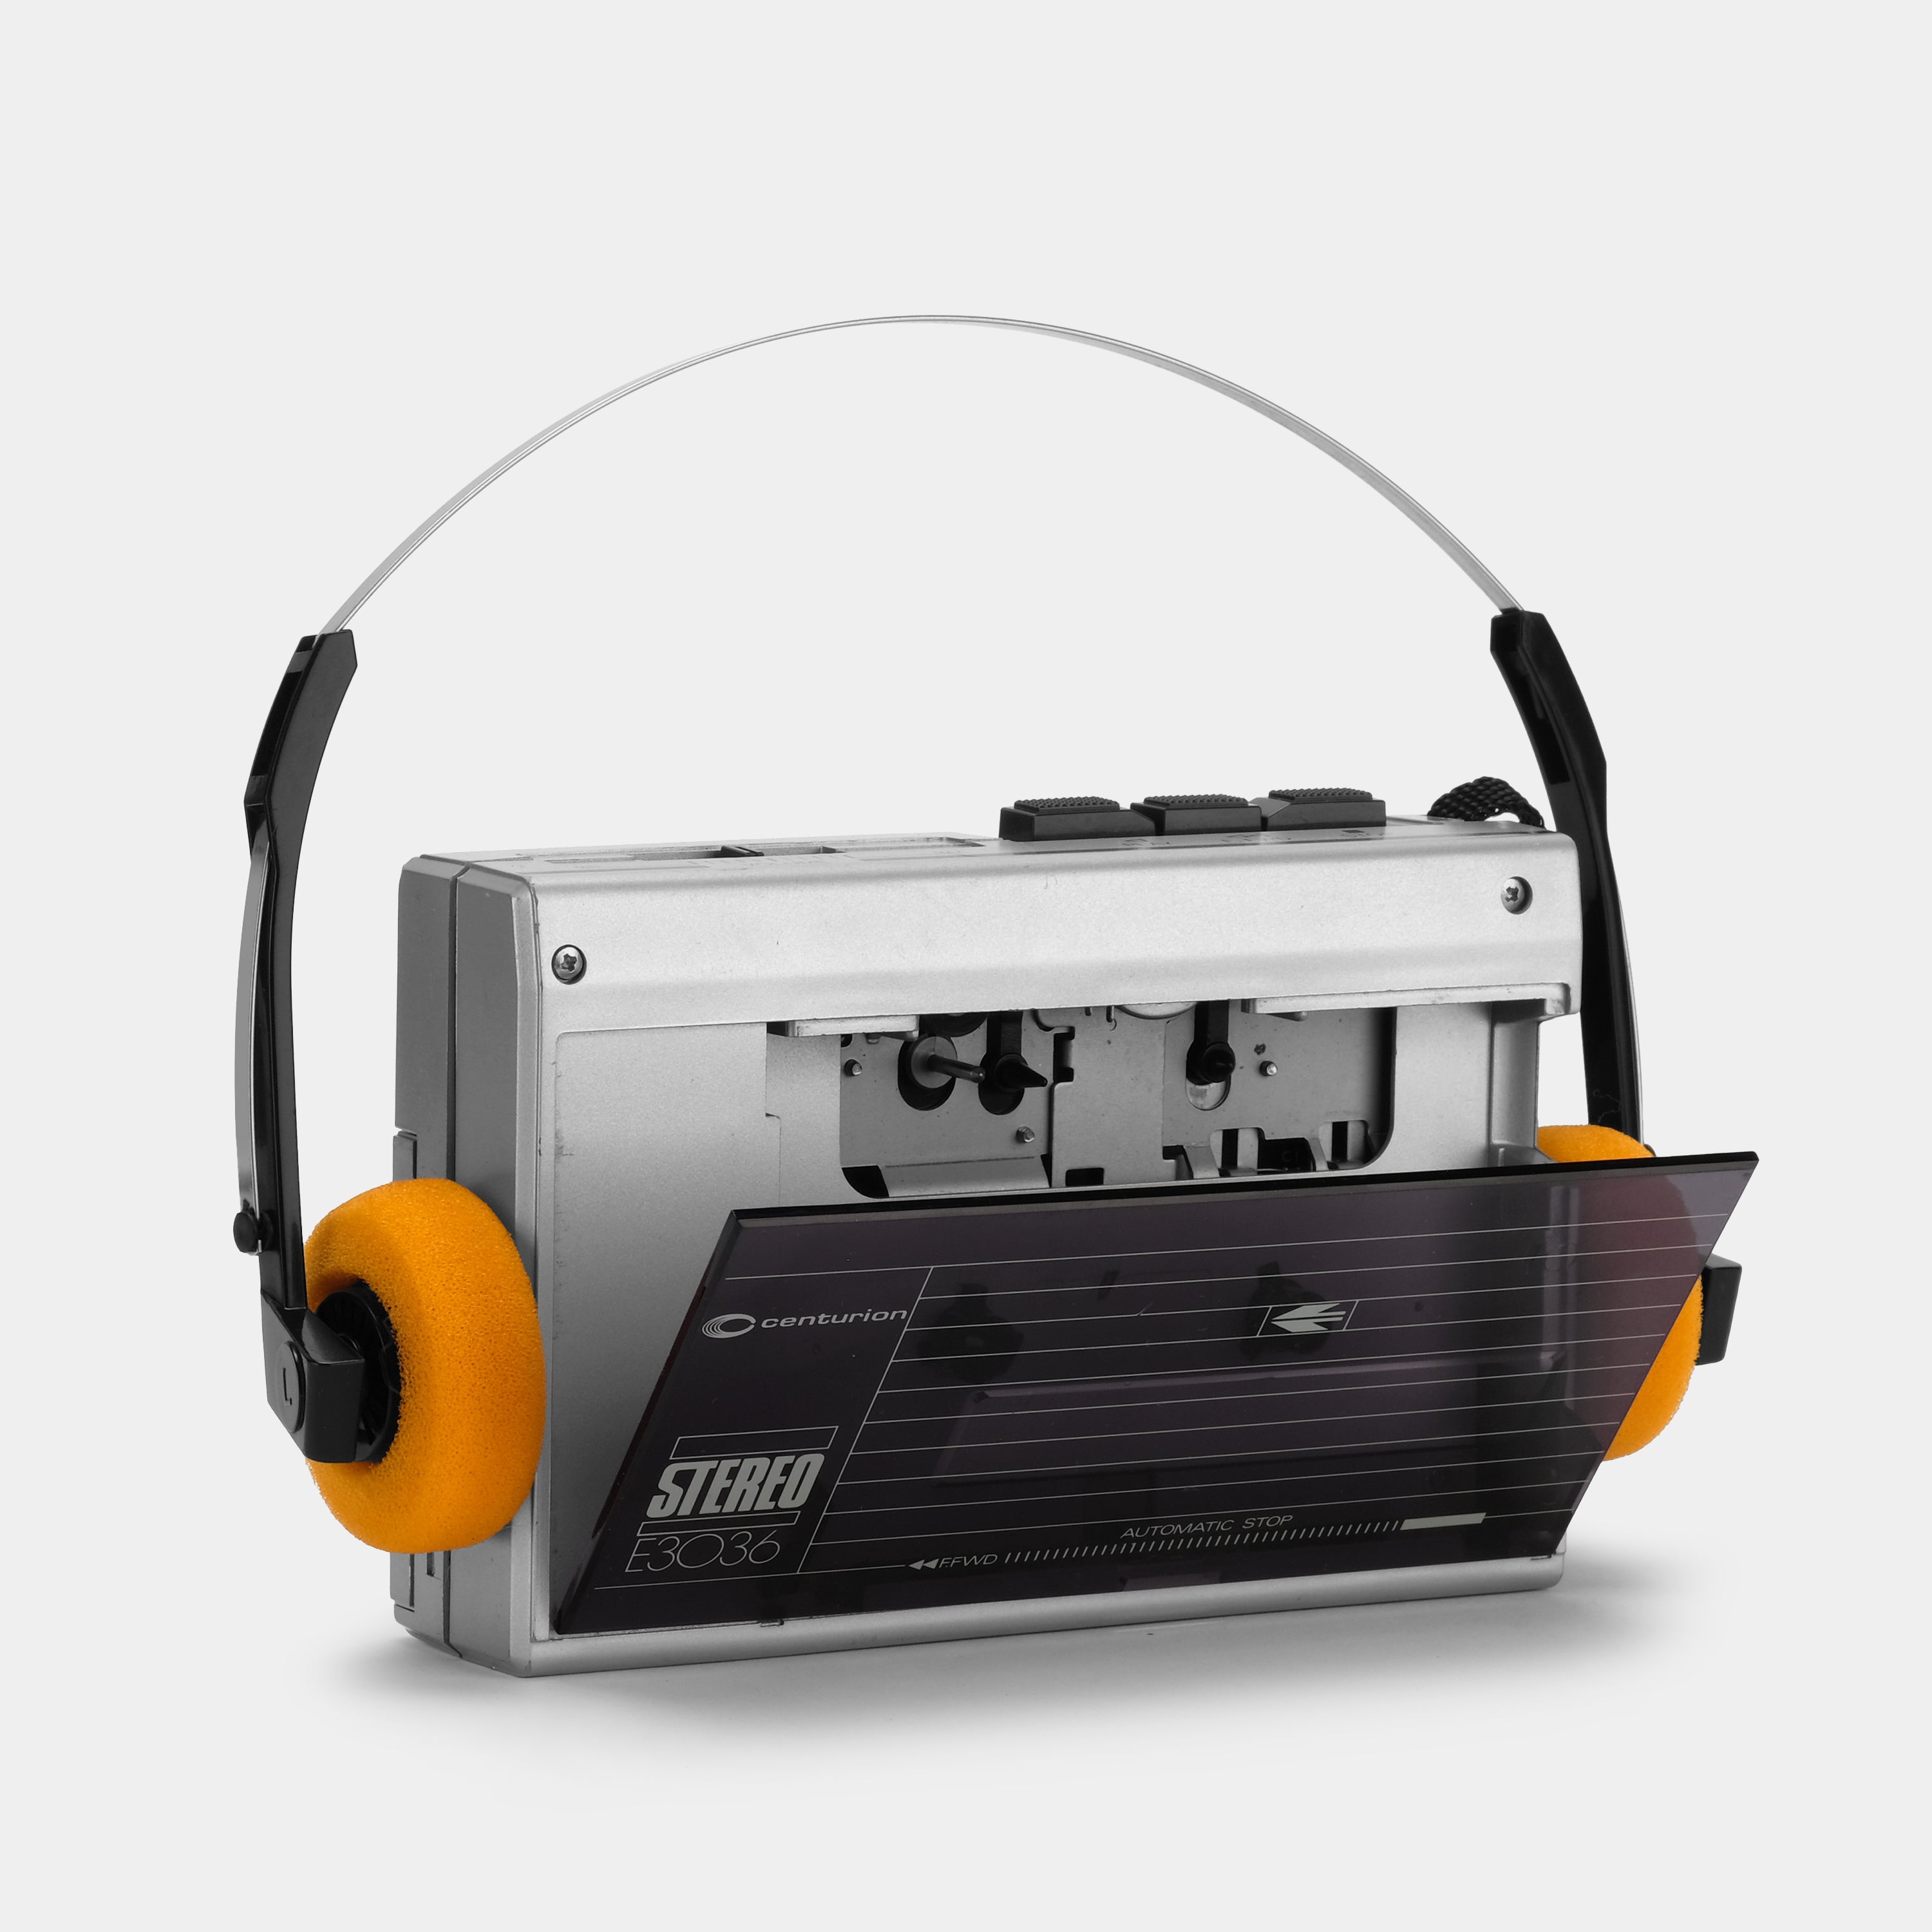 Centurion E3036 Stereo Portable Cassette Player